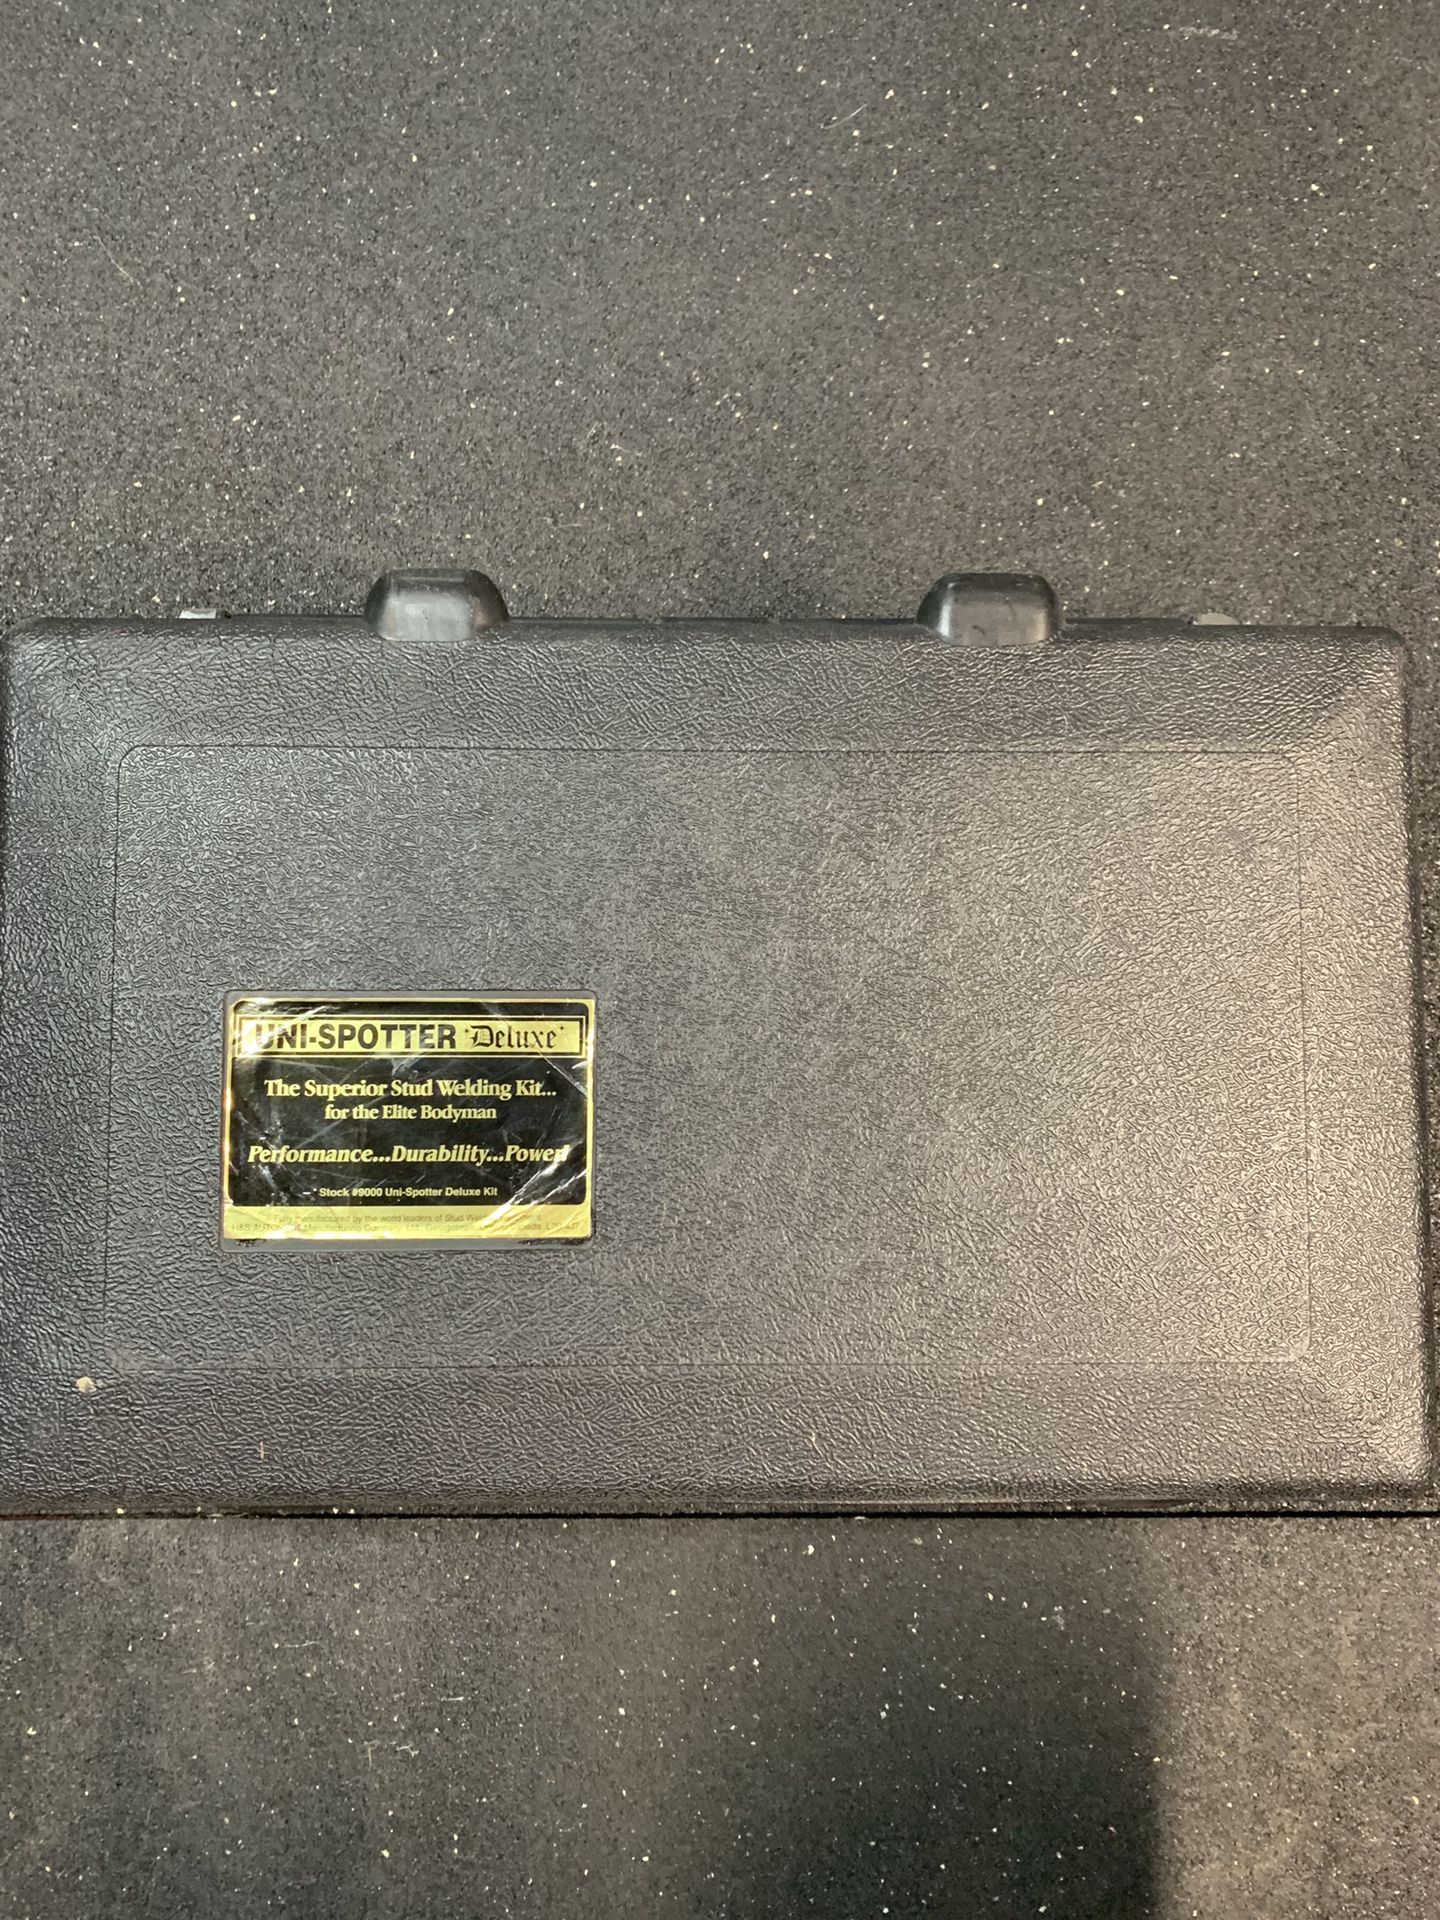 H&S Autoshot Uni-Spotter Deluxe 9000